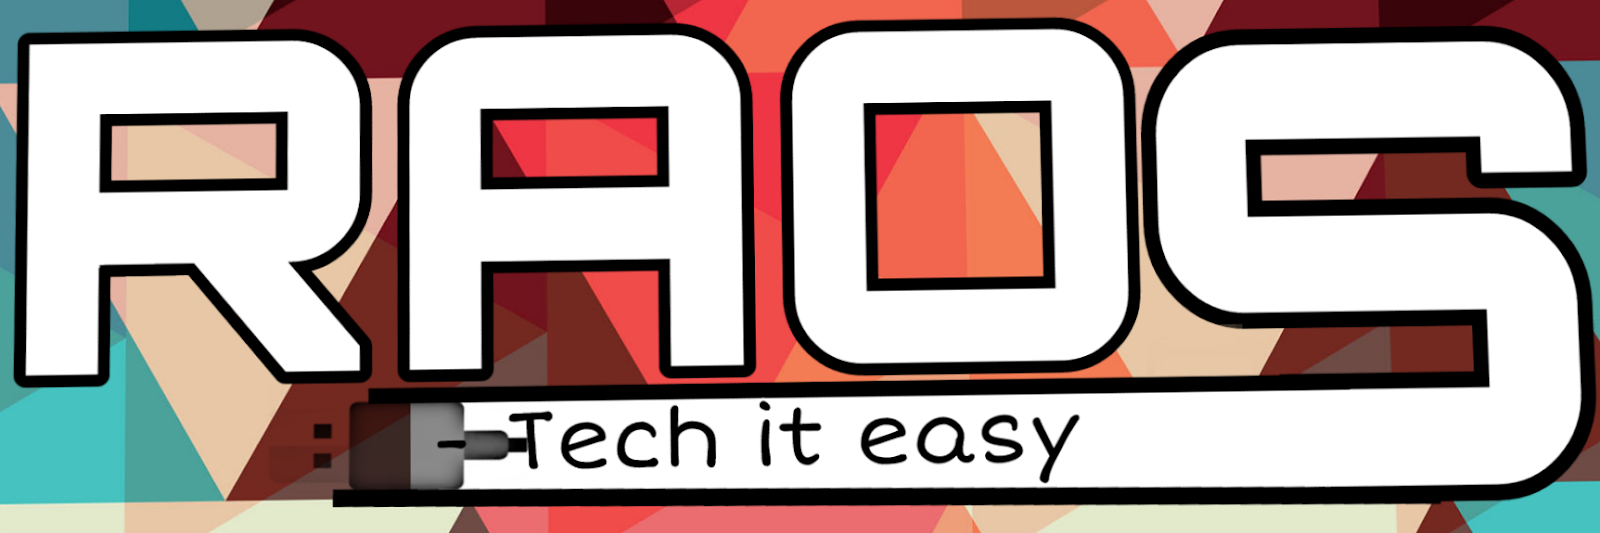 Raos-Tech it easy